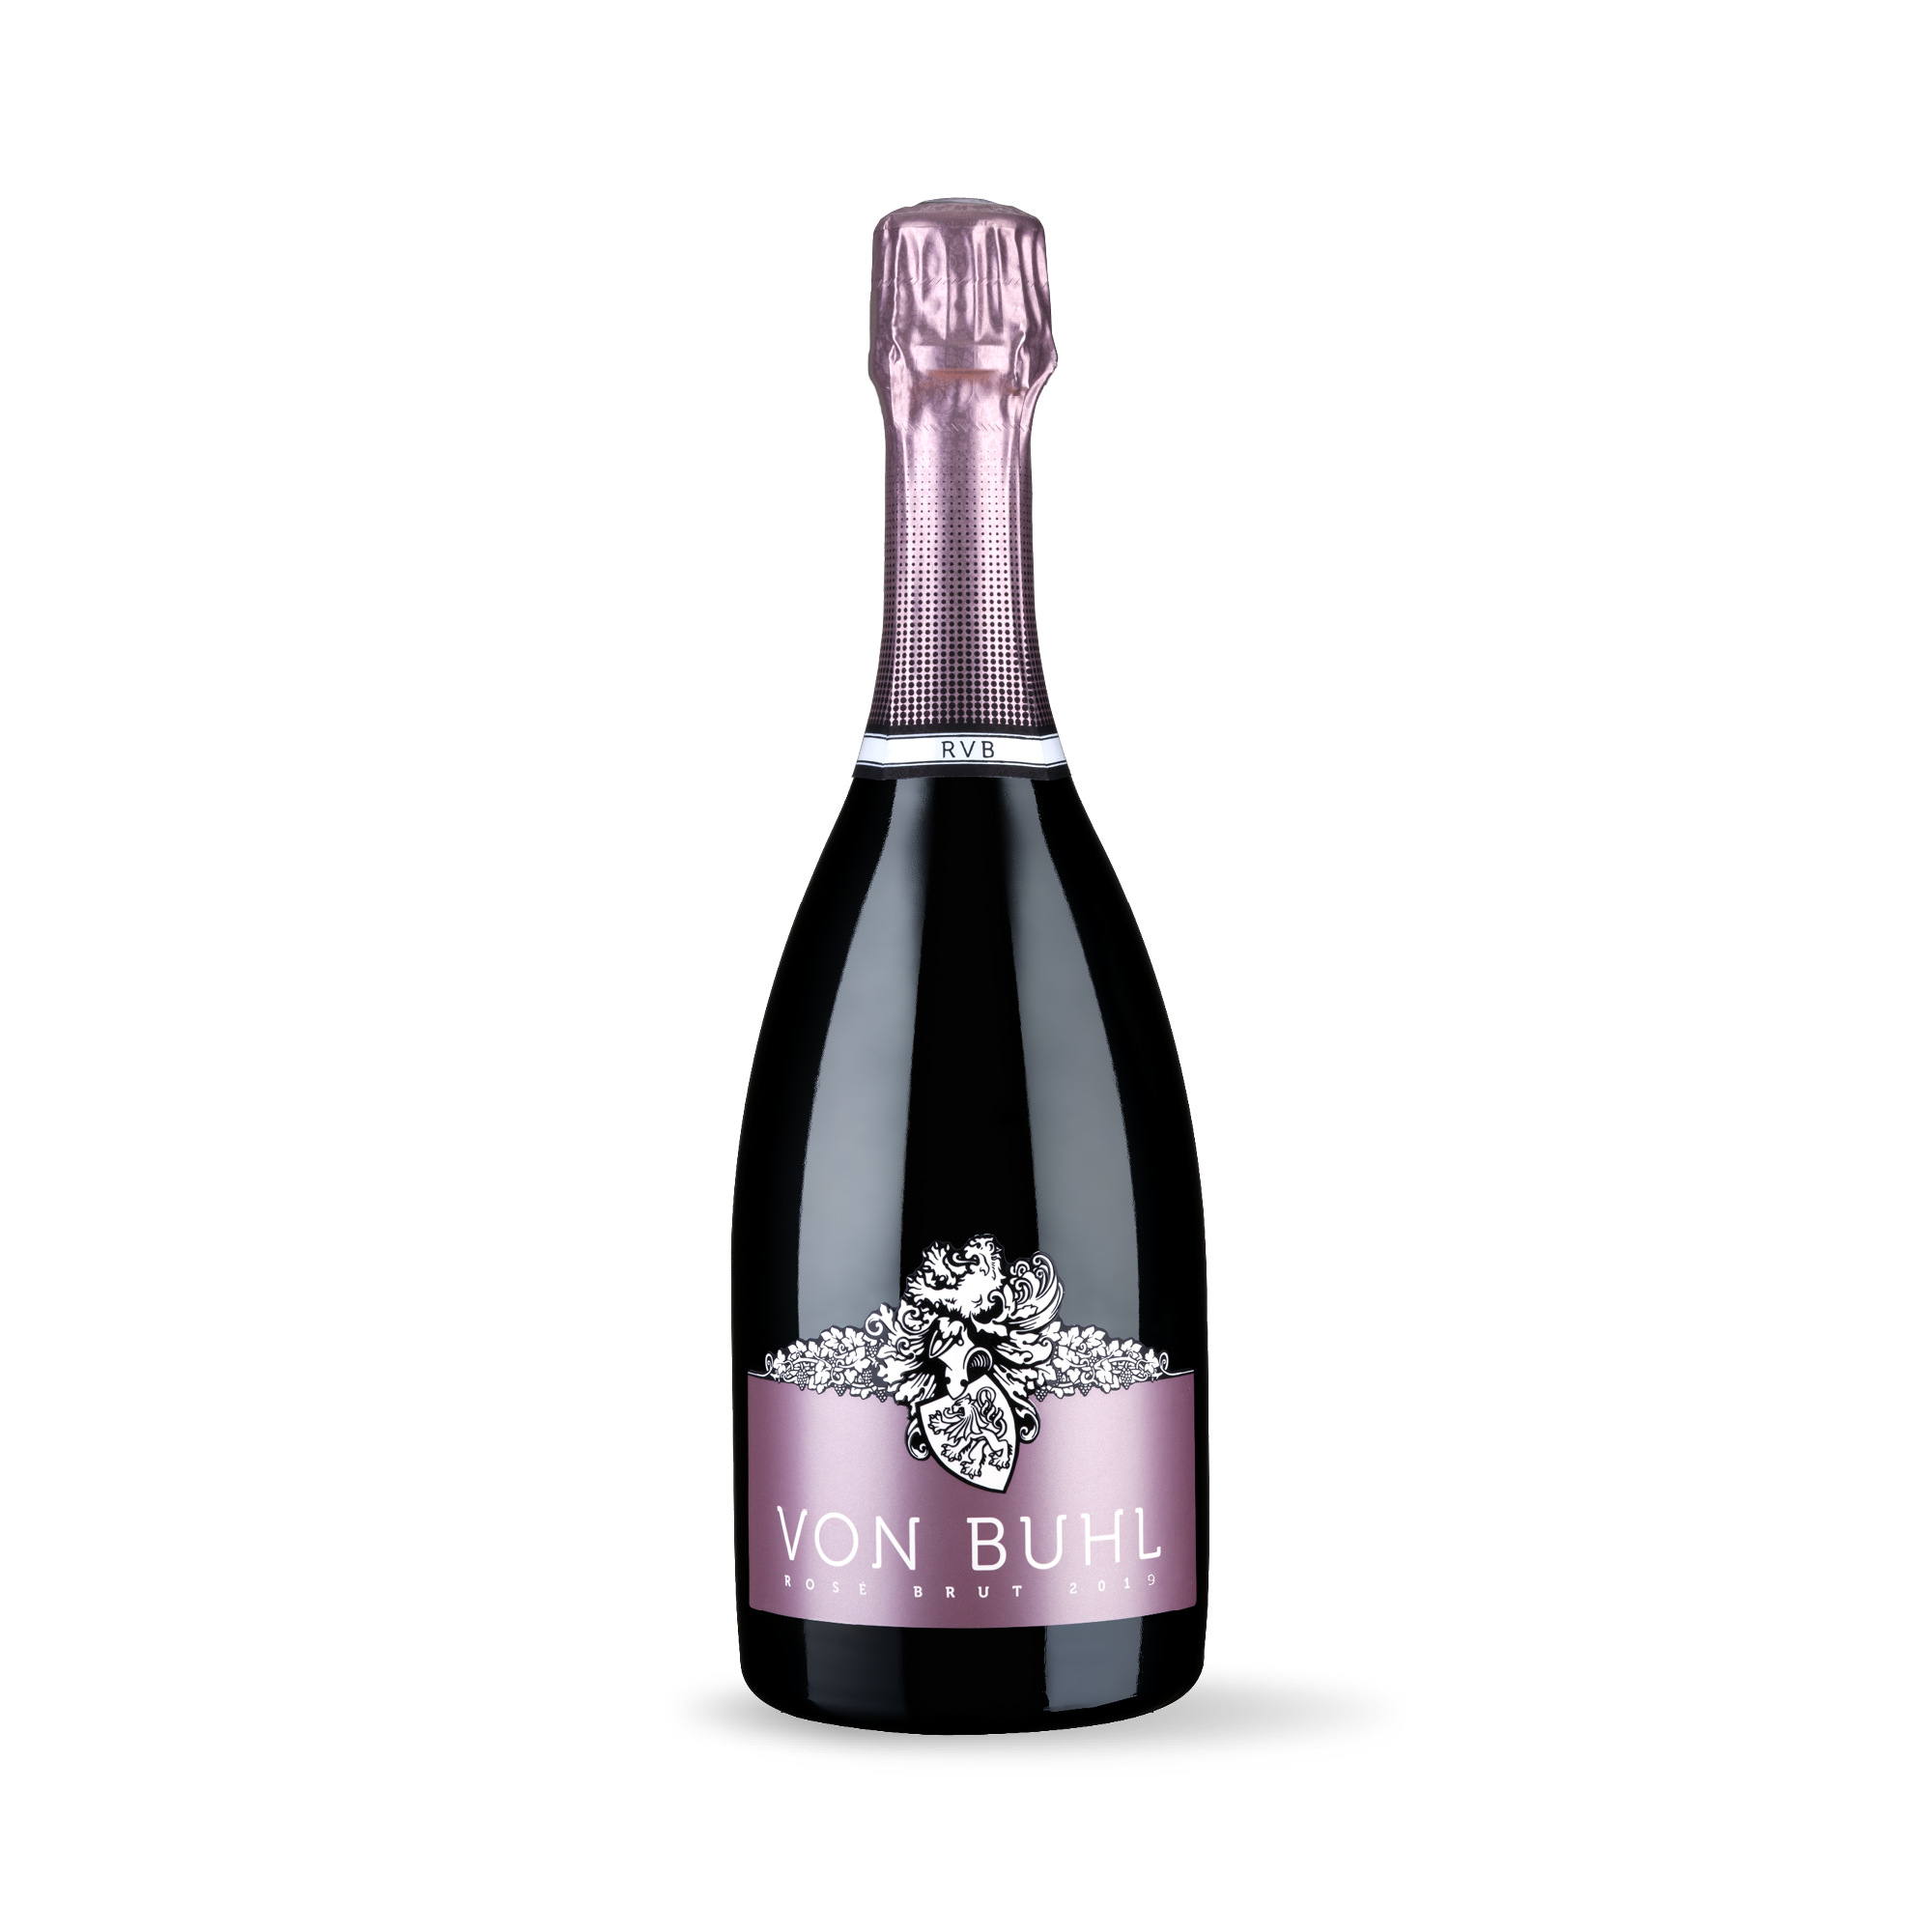 Тамань брют розовое цена. Von Buhl вино. Розовое шампанское брют. Шампанское Бахчисарай брют розовое. Von Buhl вино Zero secco.